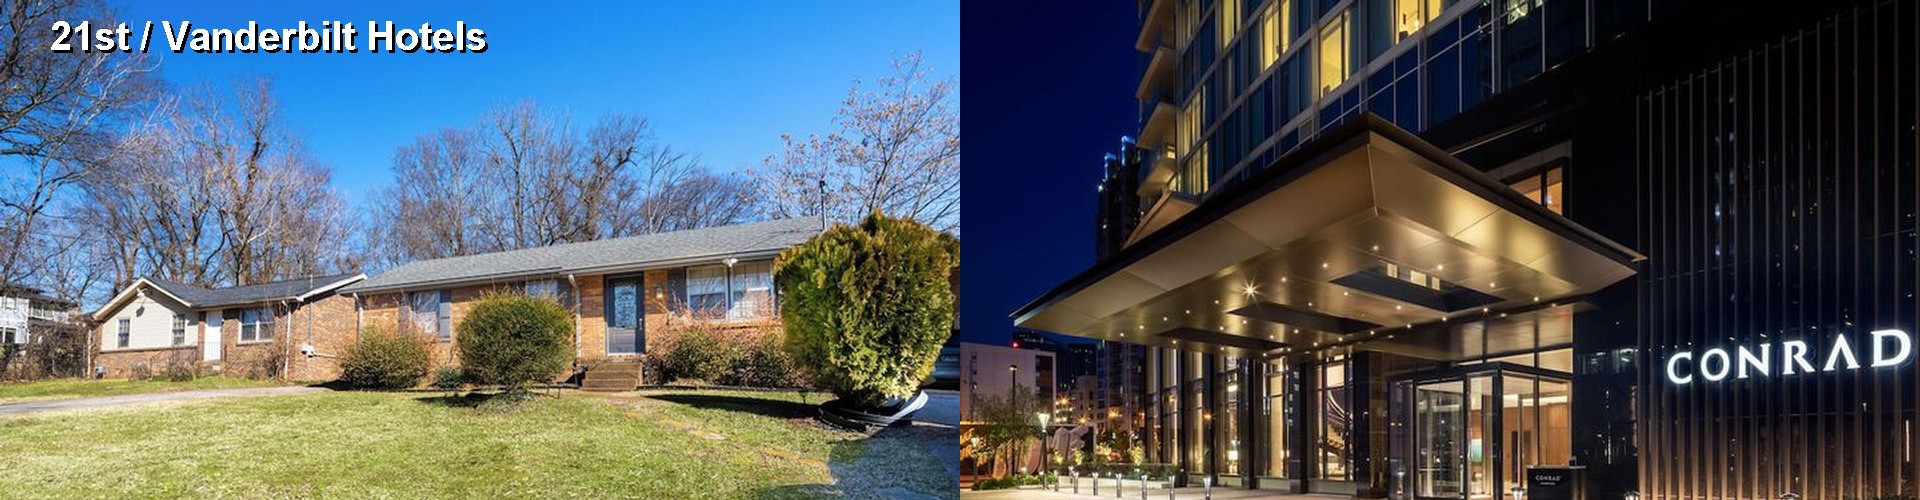 5 Best Hotels near 21st / Vanderbilt